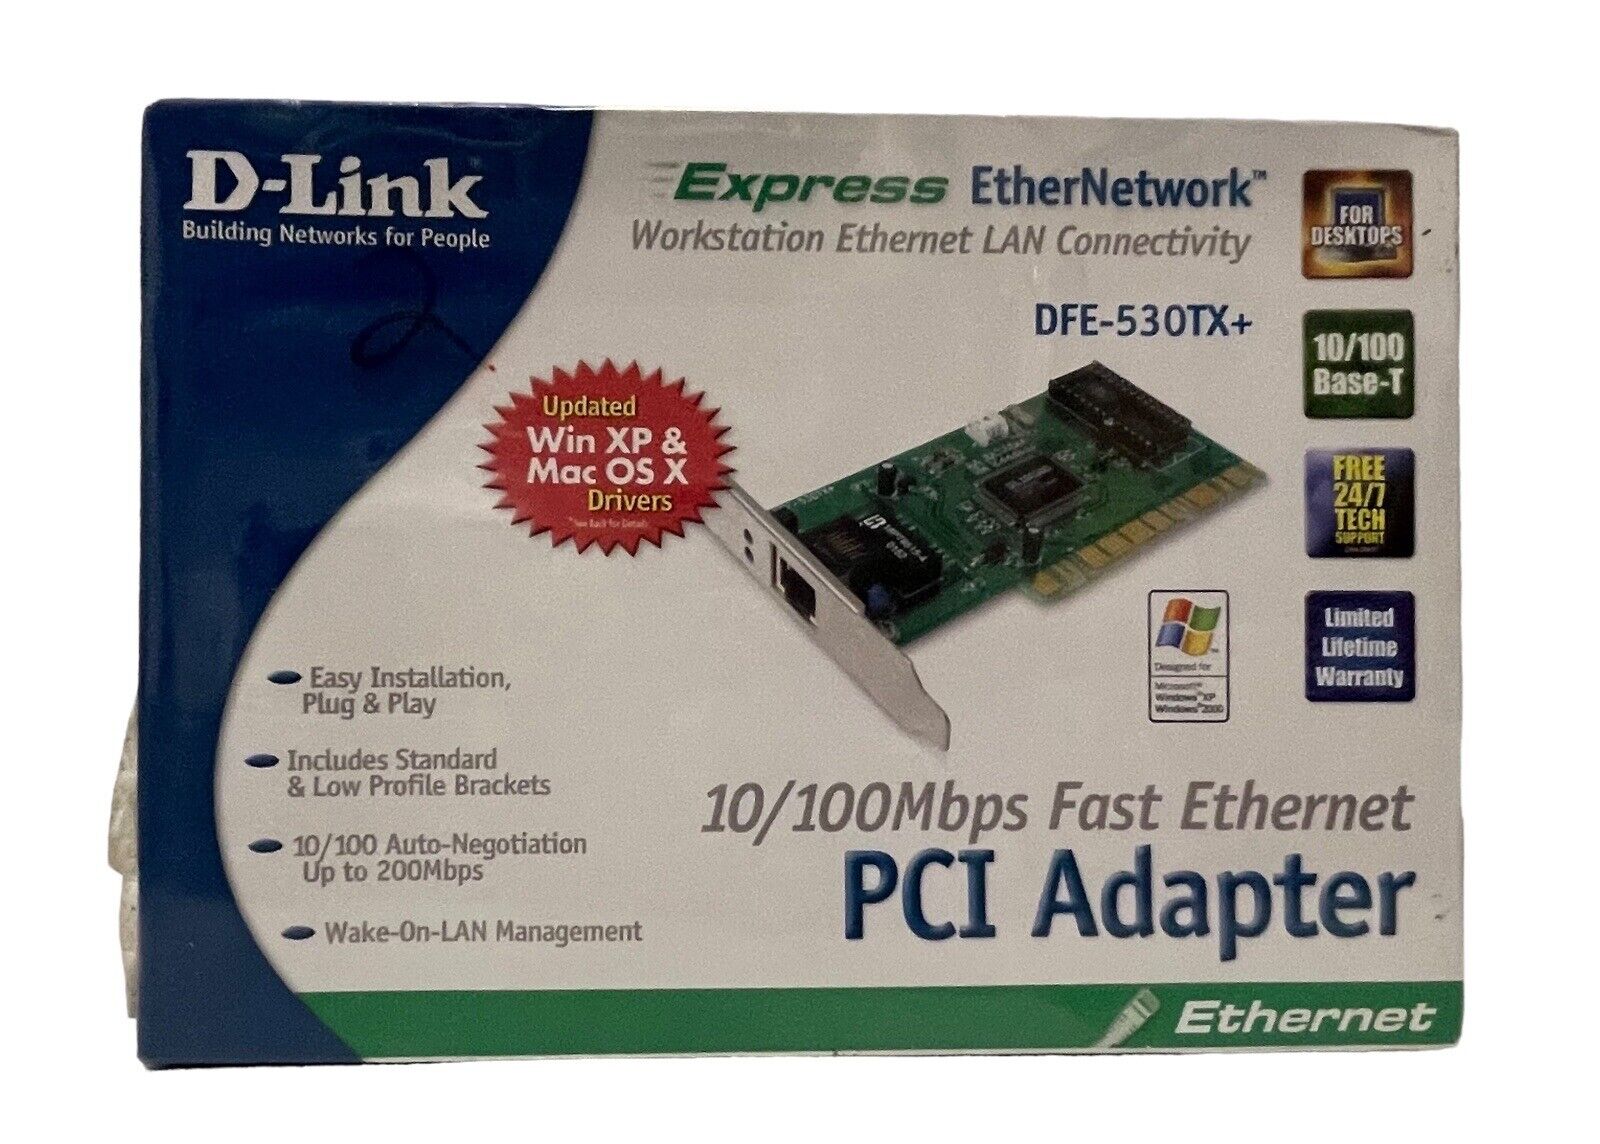 D-Link Express EtherNetwork 10/100Mbps Fast Ethernet PCI Adapter DFE-530TX+